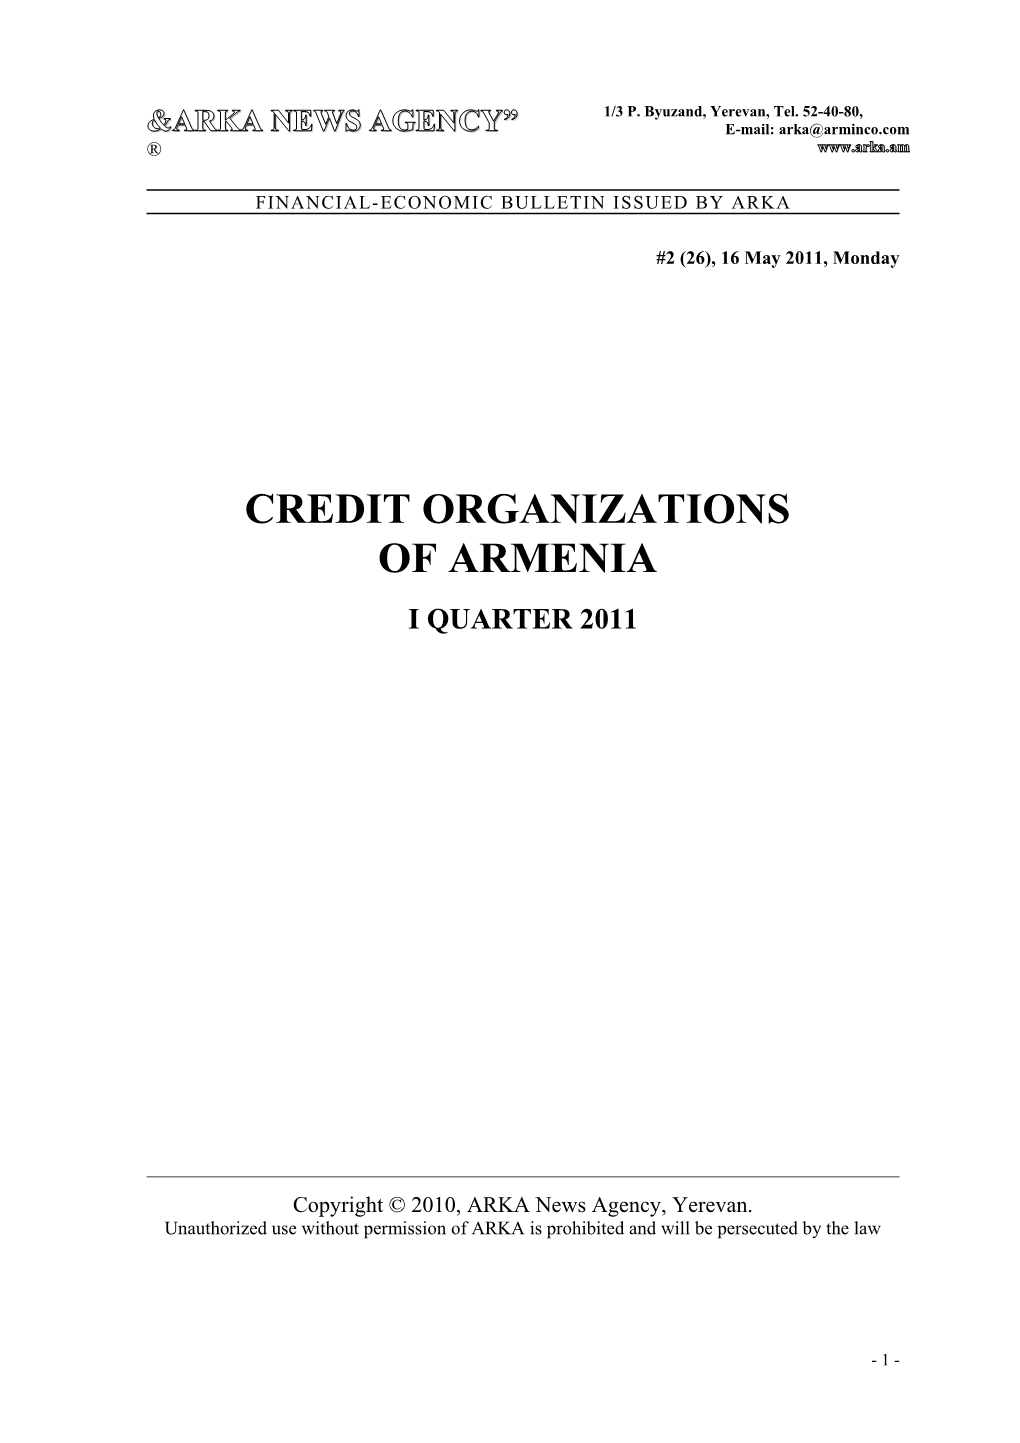 Activity Indicators of Credit Organizations of Armenia